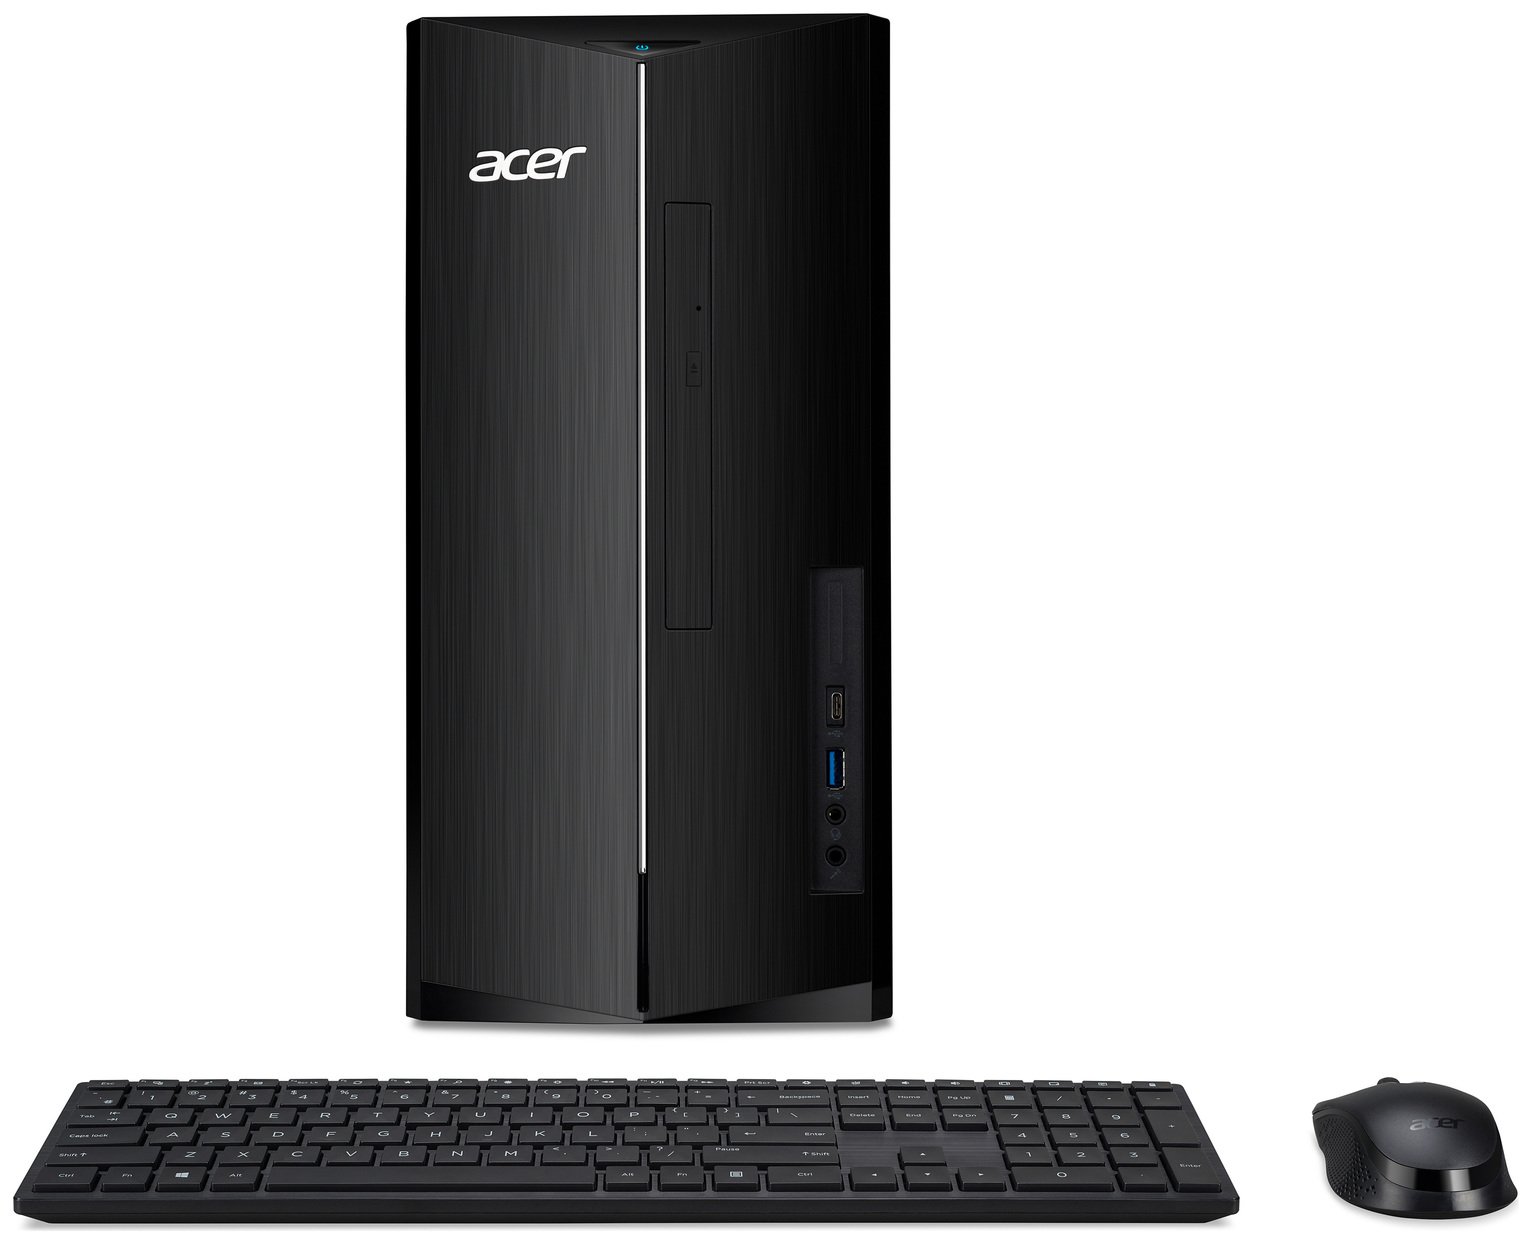 Acer Aspire TC-1760 i3 8GB 2TB Desktop PC